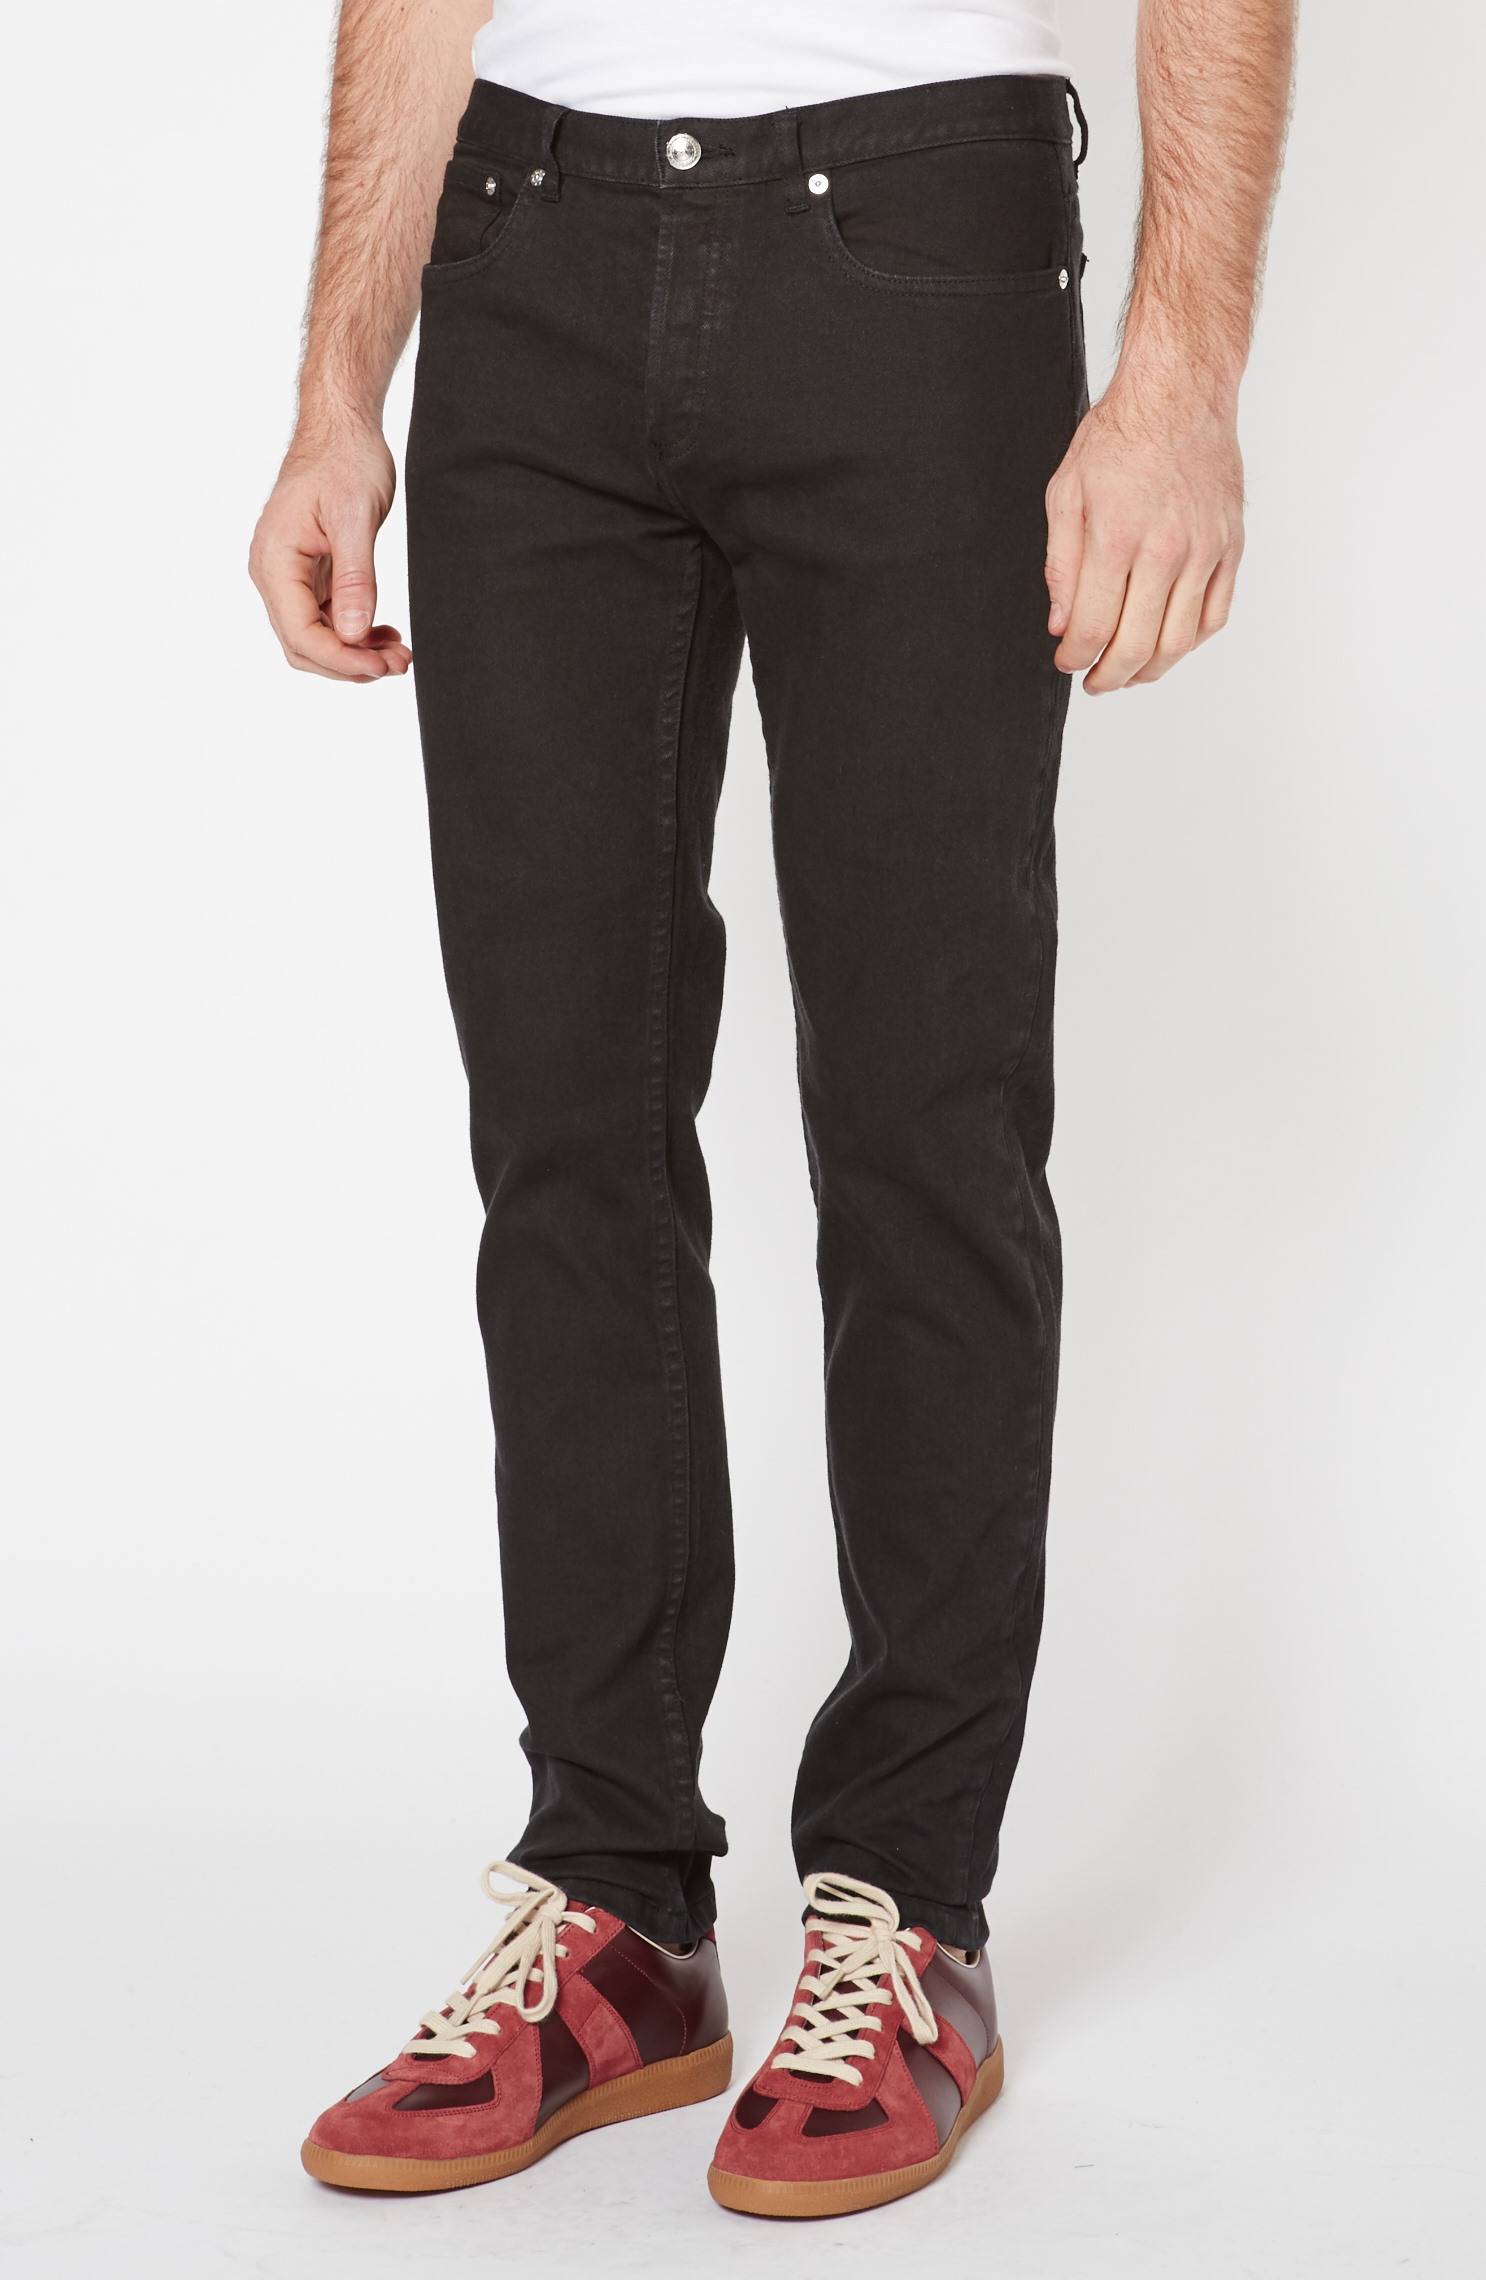 A.P.C. - Schwarze Jeans „Petit Standard“ Herren - Schwittenberg